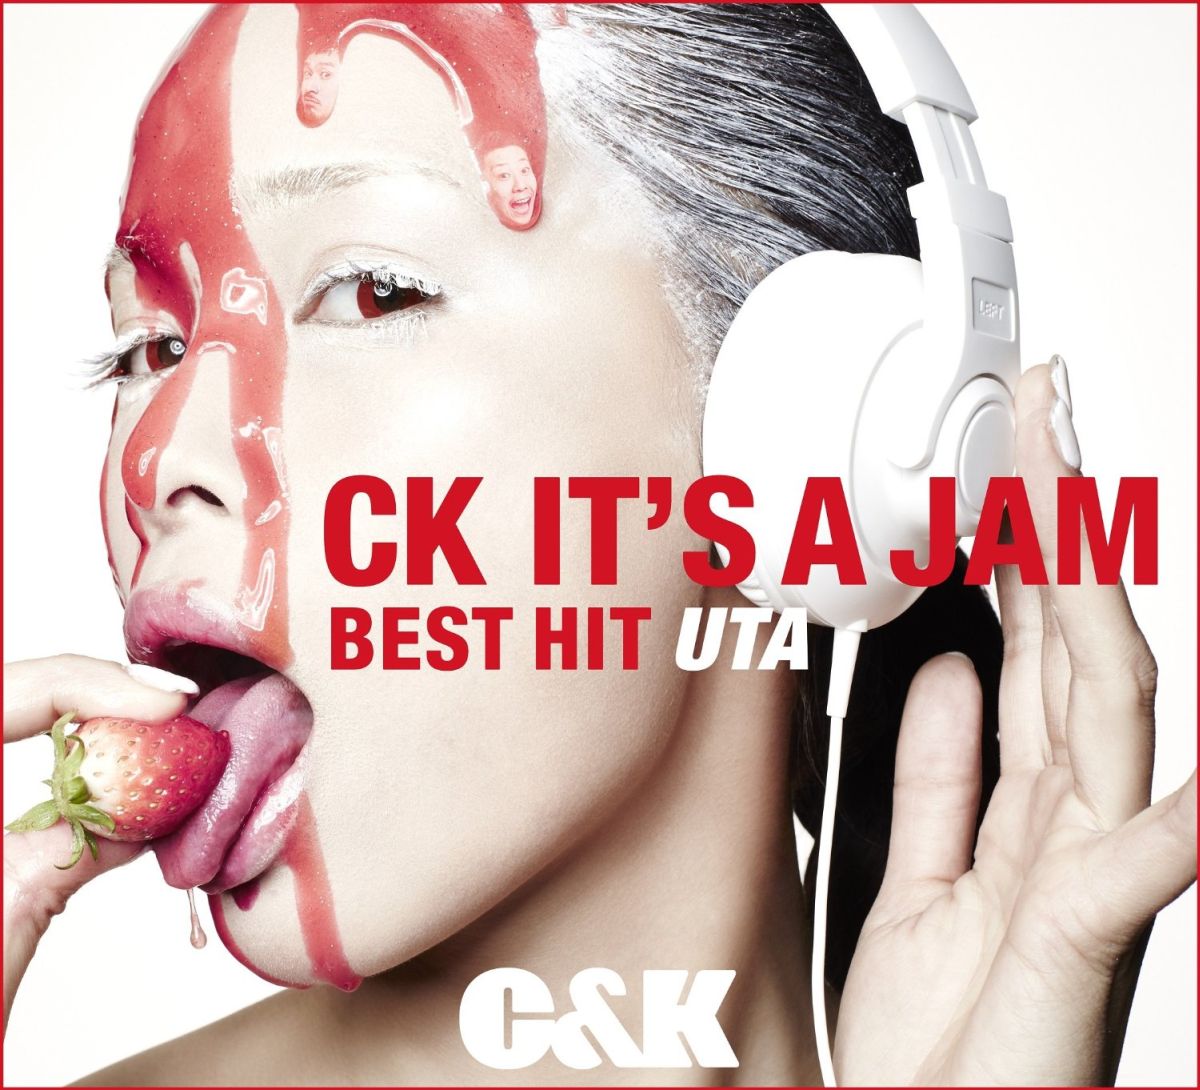 CK IT'S A JAM 〜BEST HIT UTA画像